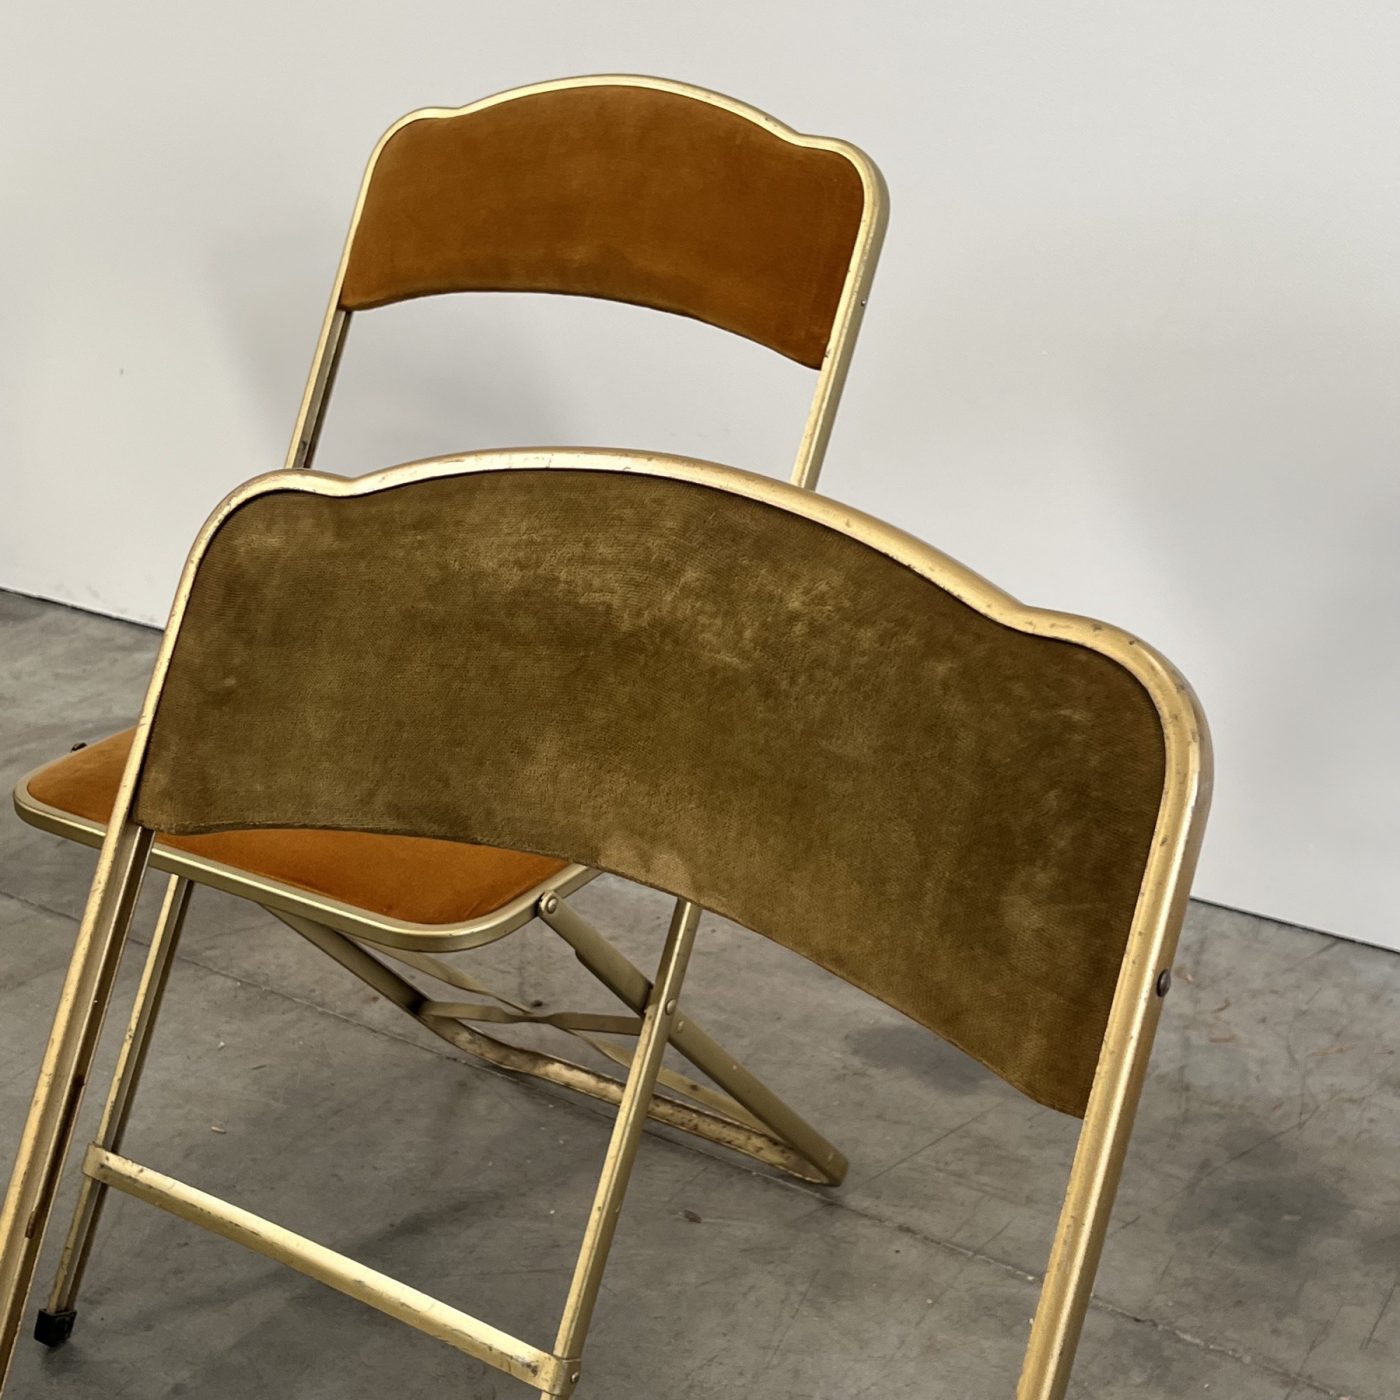 objet-vagabond-folding-chairs0006